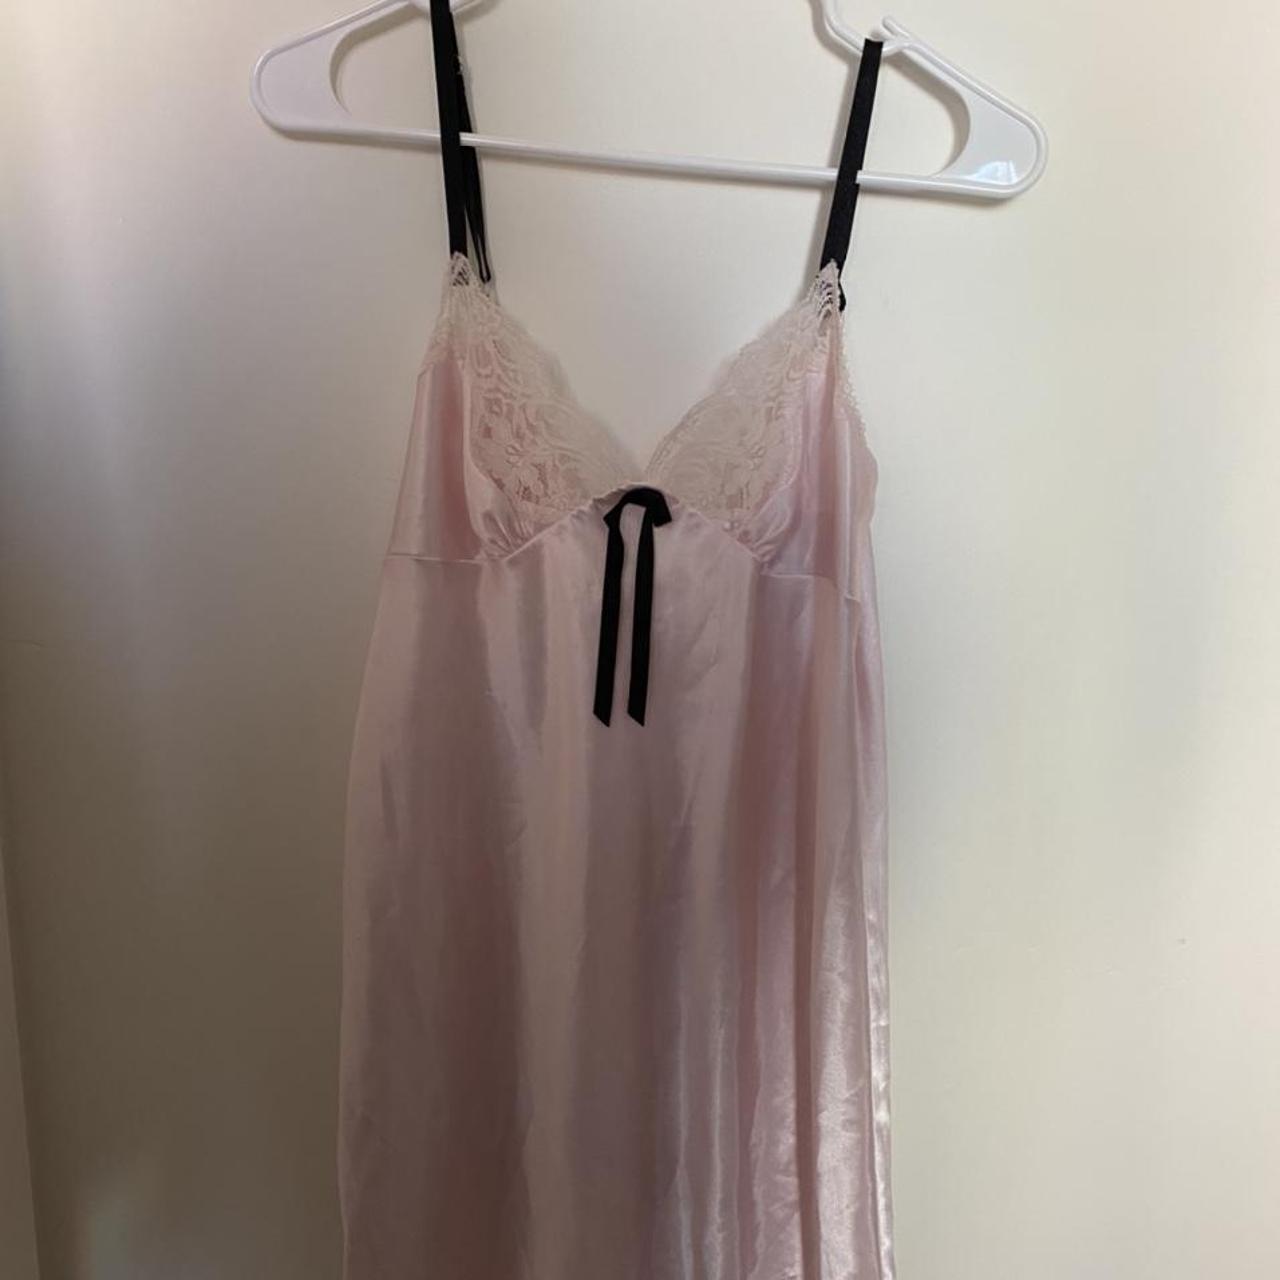 Light pink lace silk slip dress - Depop